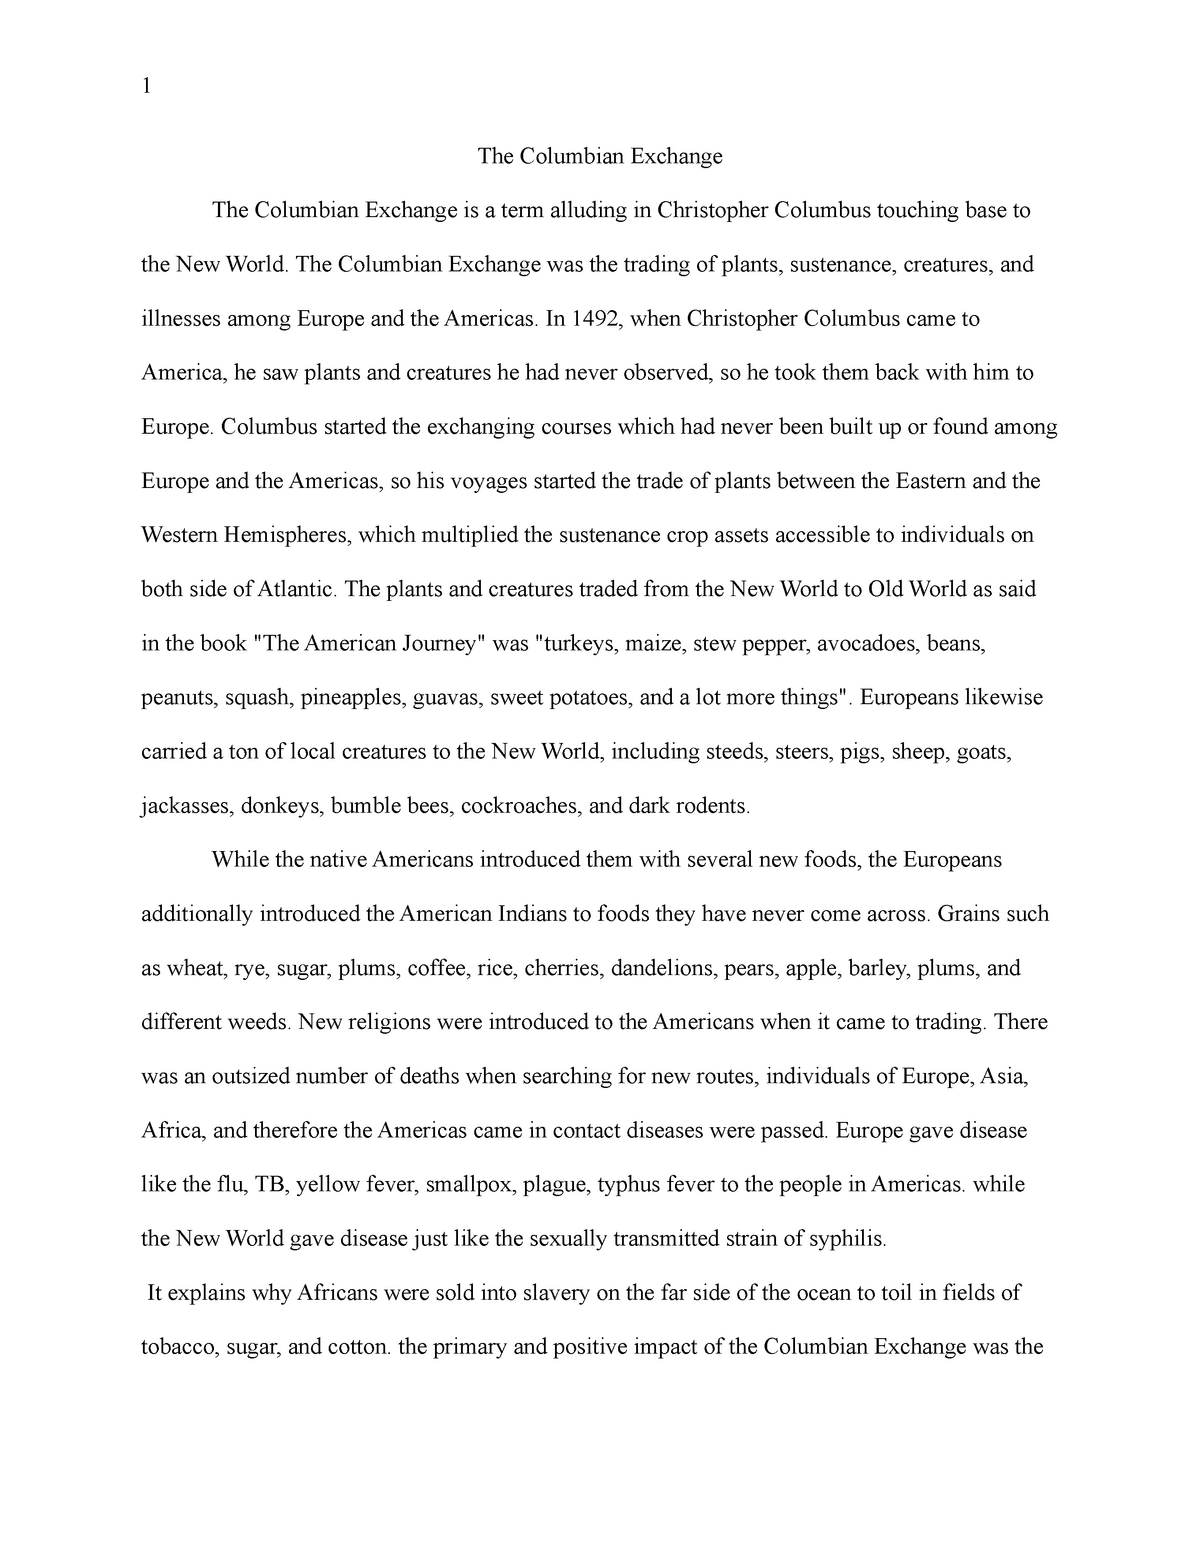 columbian exchange essay introduction